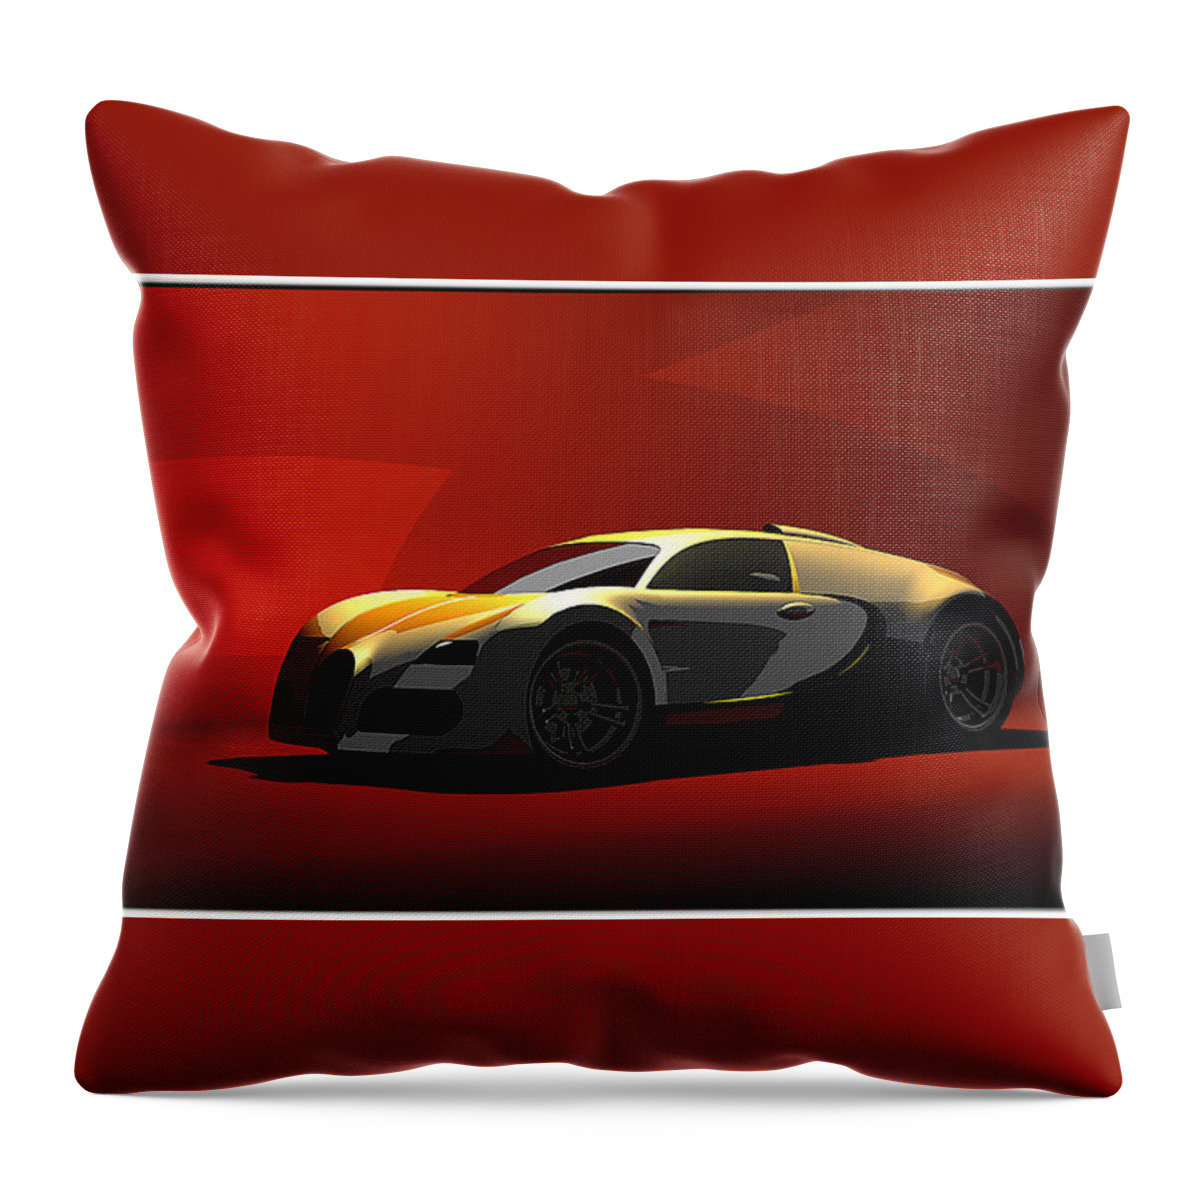 Bugatti Throw Pillow featuring the digital art Bugatti Veyron - front by Andrei SKY